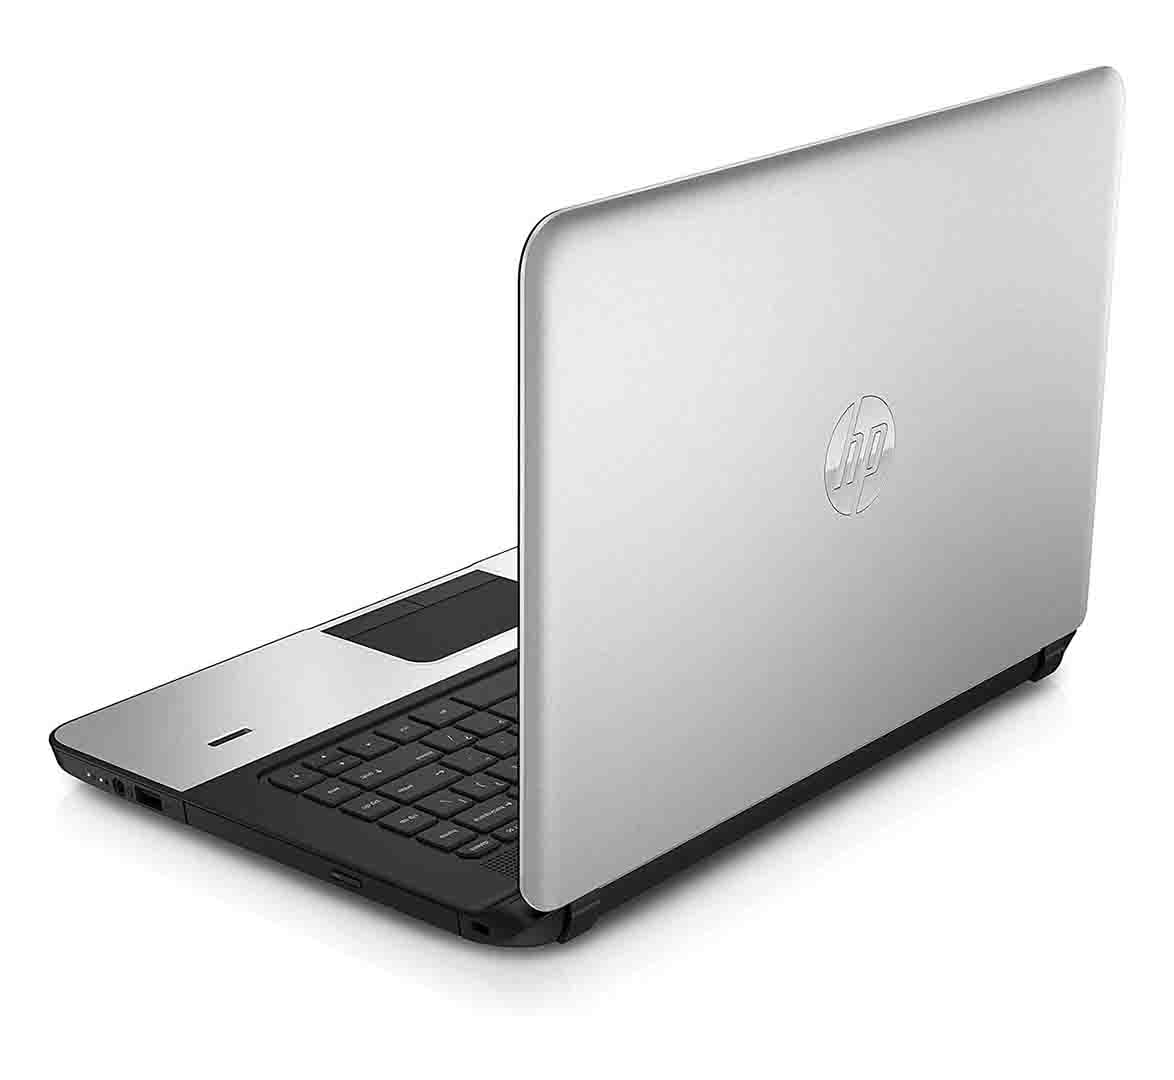 HP EliteBook 340 G1 Business Laptop, Intel Core i5-4th Generation CPU, 8GB RAM, 320GB HDD, 14 inch Display, Windows 10 Pro, Refurbished Laptop